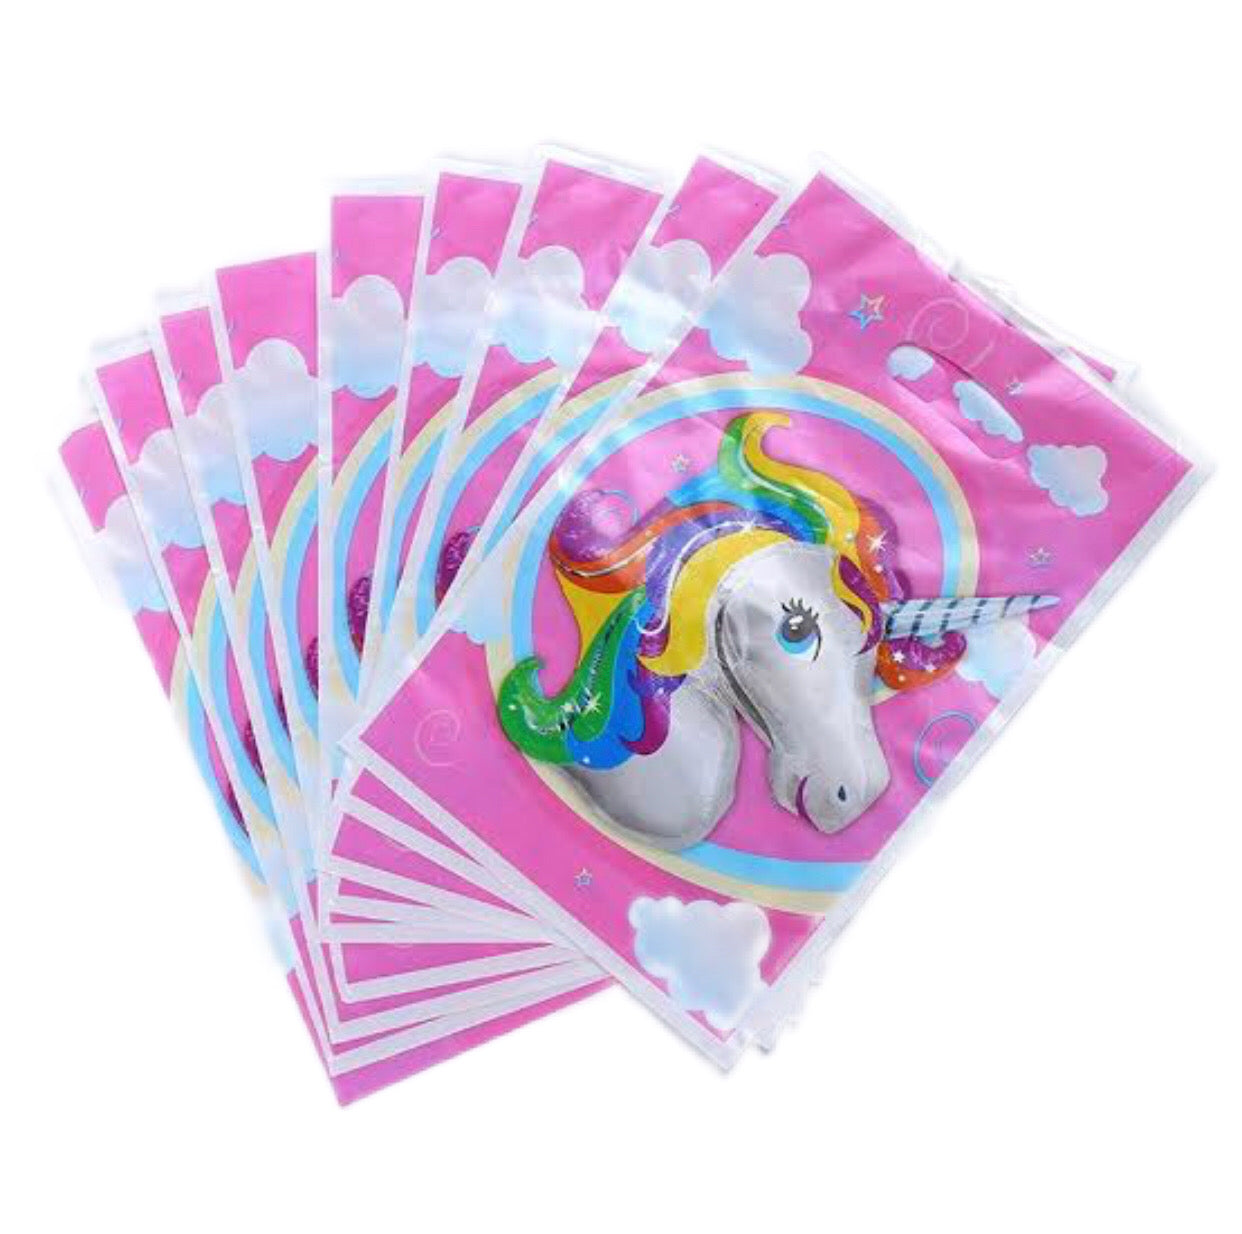 Happy Birthday Party loot bag - Pink Unicorn V&N Goodies Galore